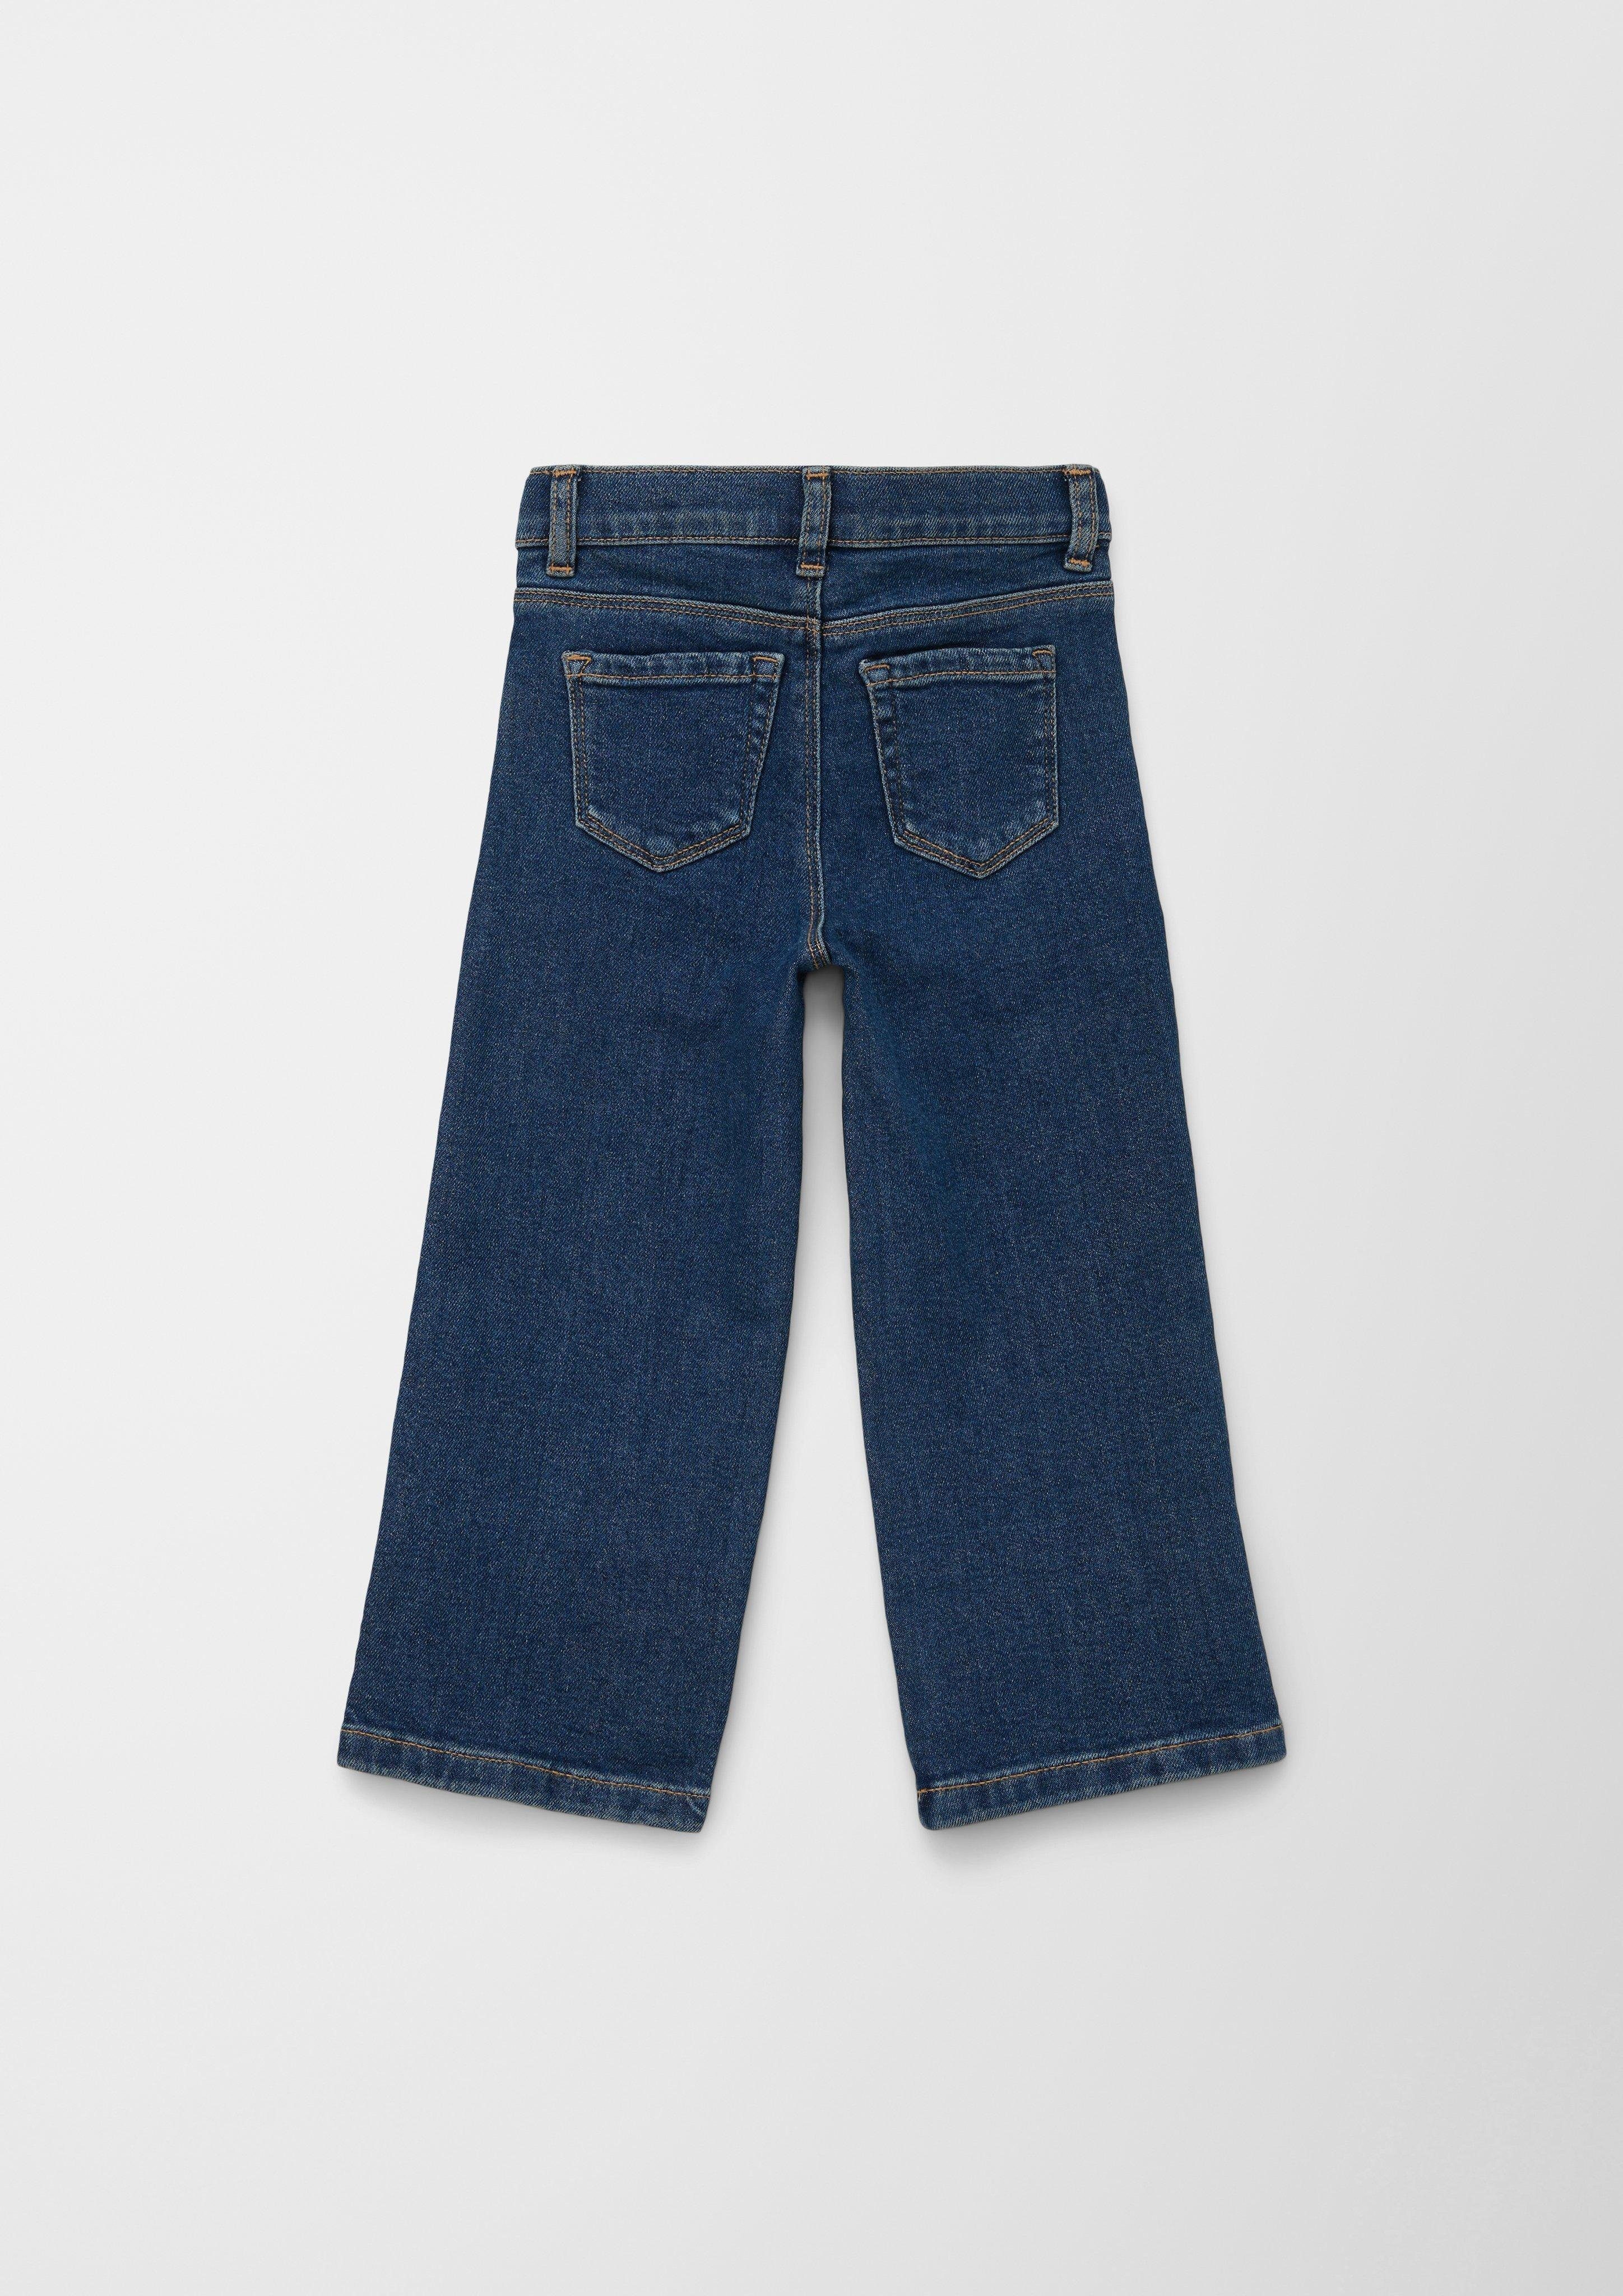 s.Oliver Stoffhose Jeans / / Rise Leg / Weitenregulierung Fit / Regular Mid Wide Waschung, Kontrastnähte